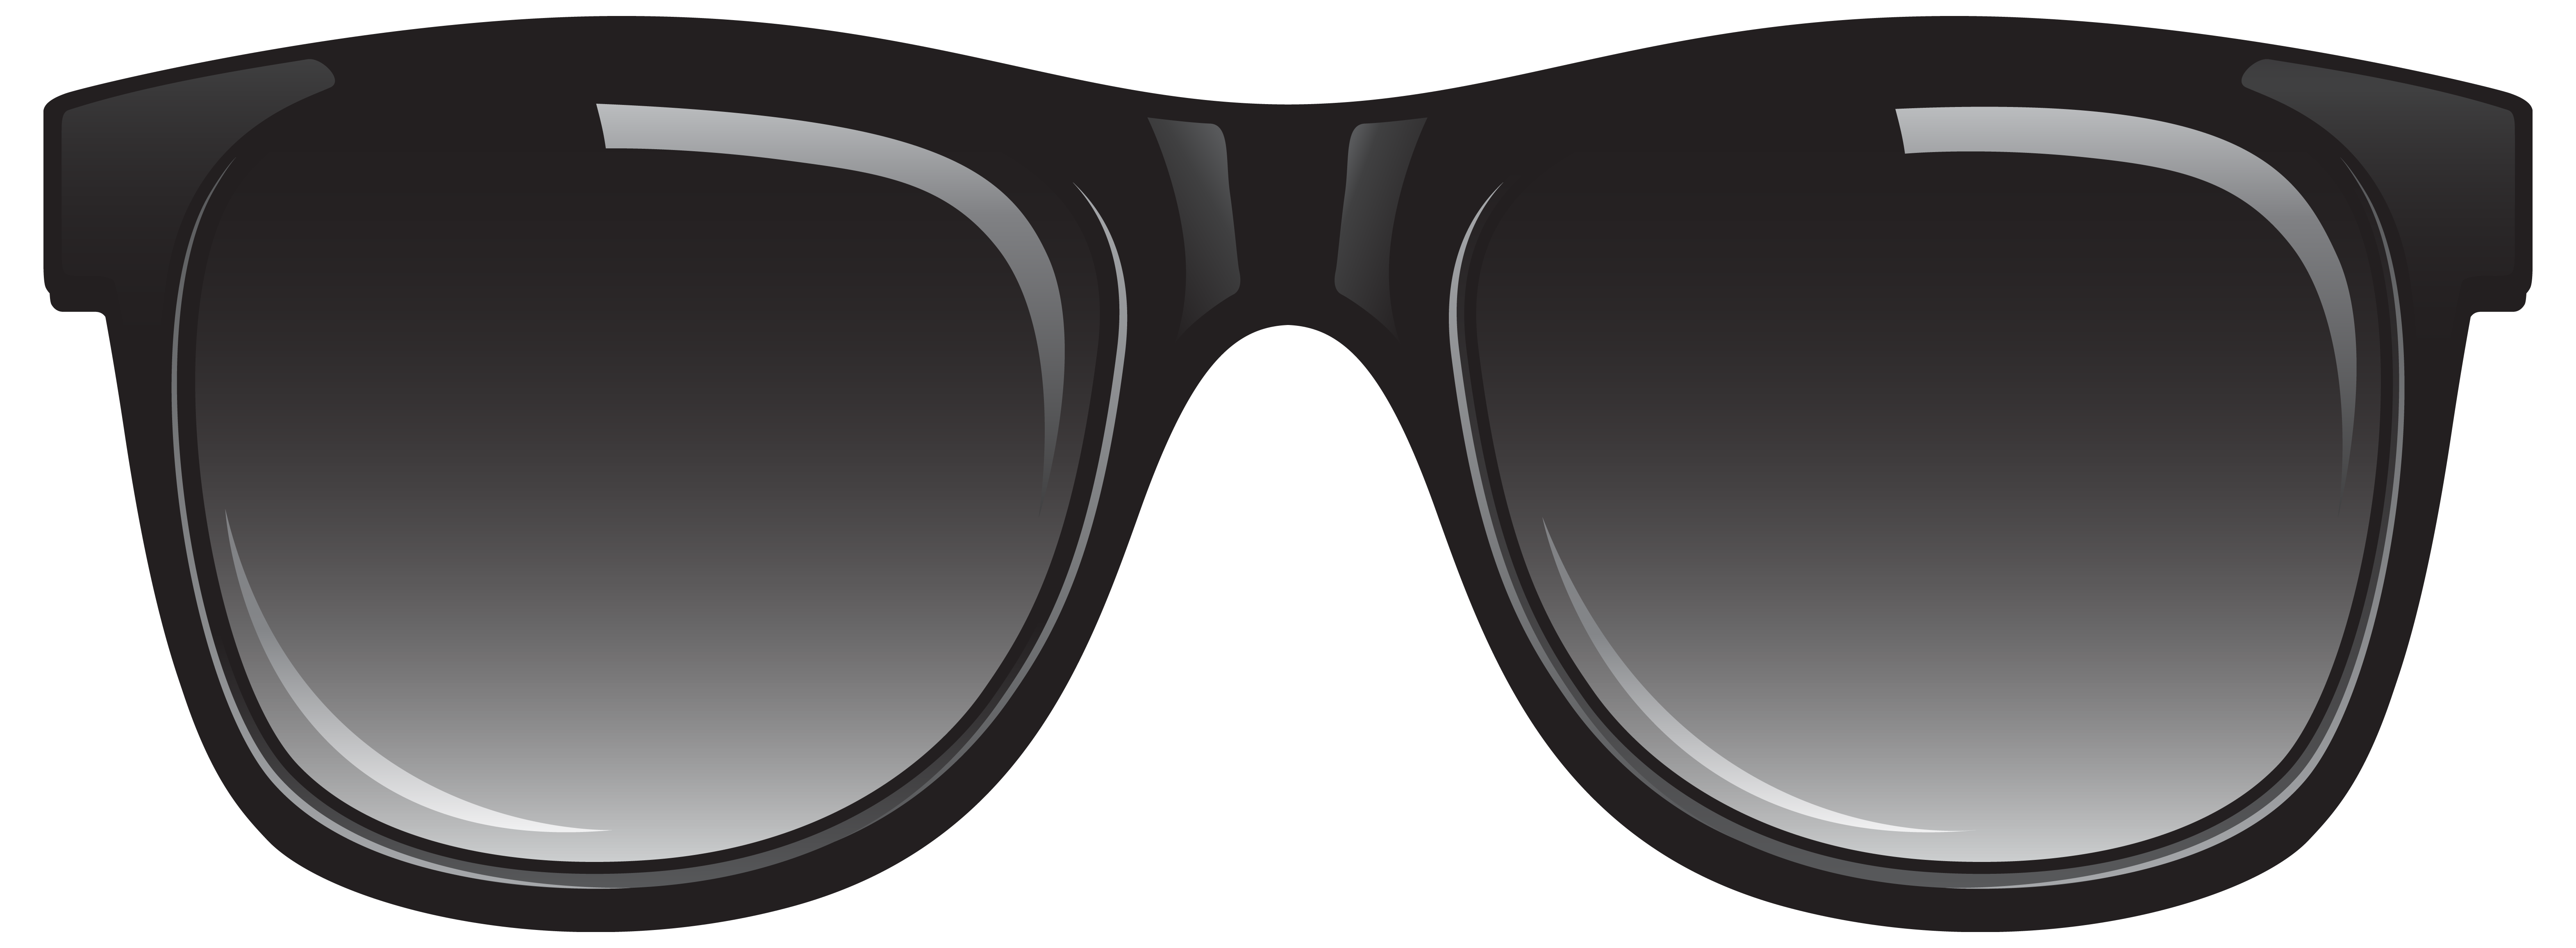 Black Sunglasses Png Image